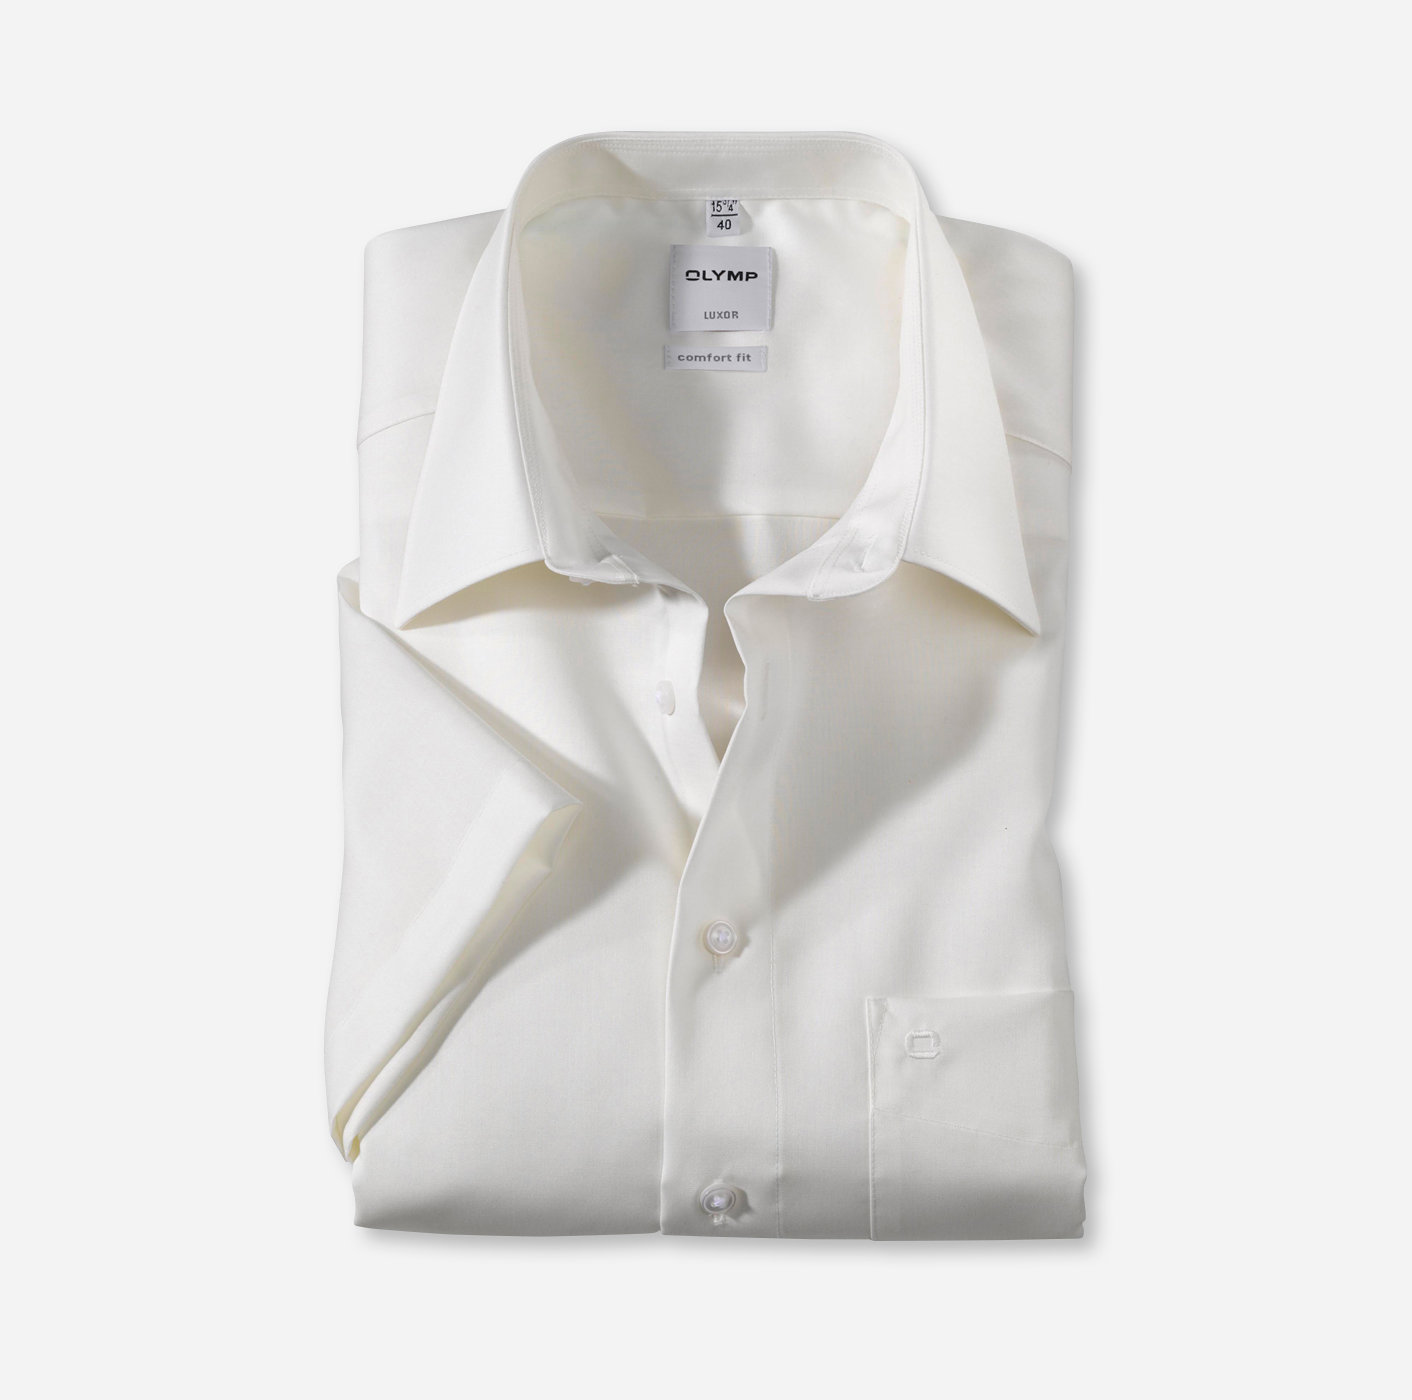 OLYMP Luxor, comfort fit, Business shirt, Kent, Beige